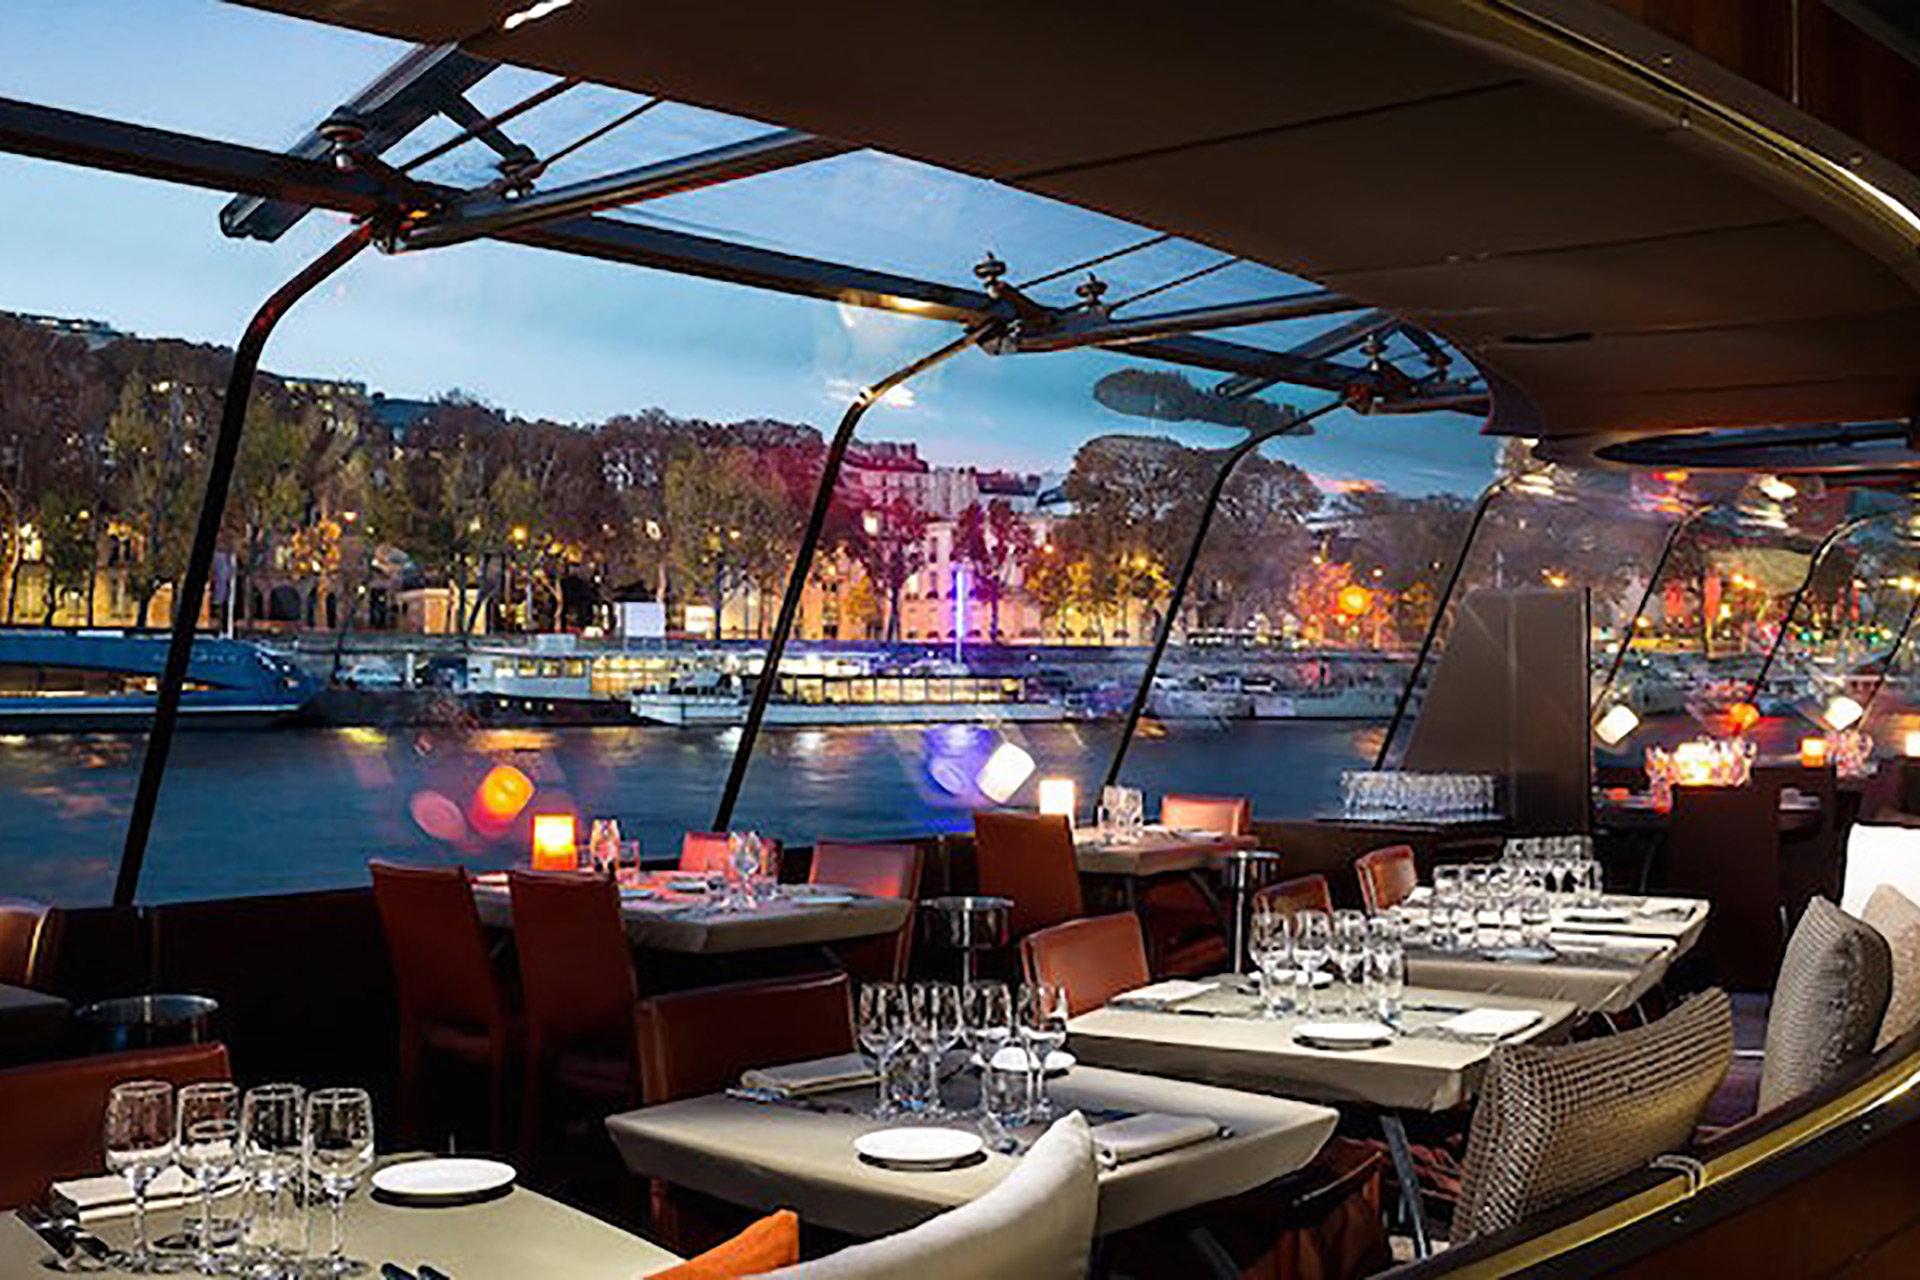 paris seine river gourmet dinner cruise with champagne